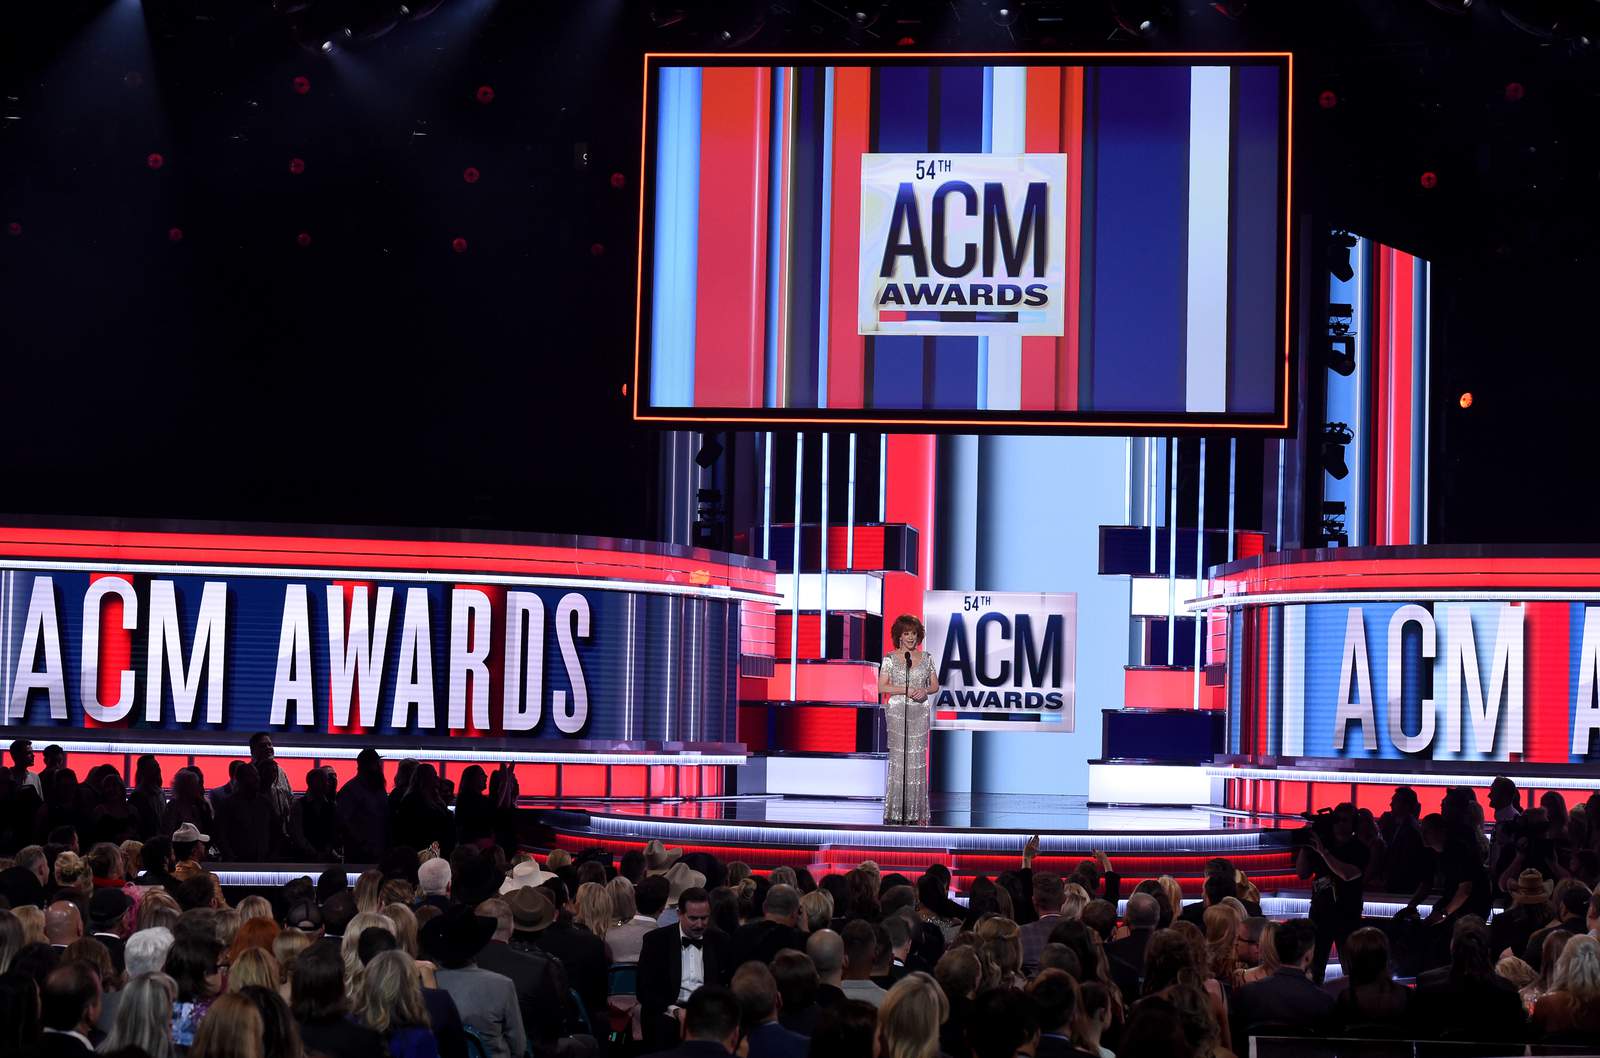 ACM Awards show returns to Nashville venues in April